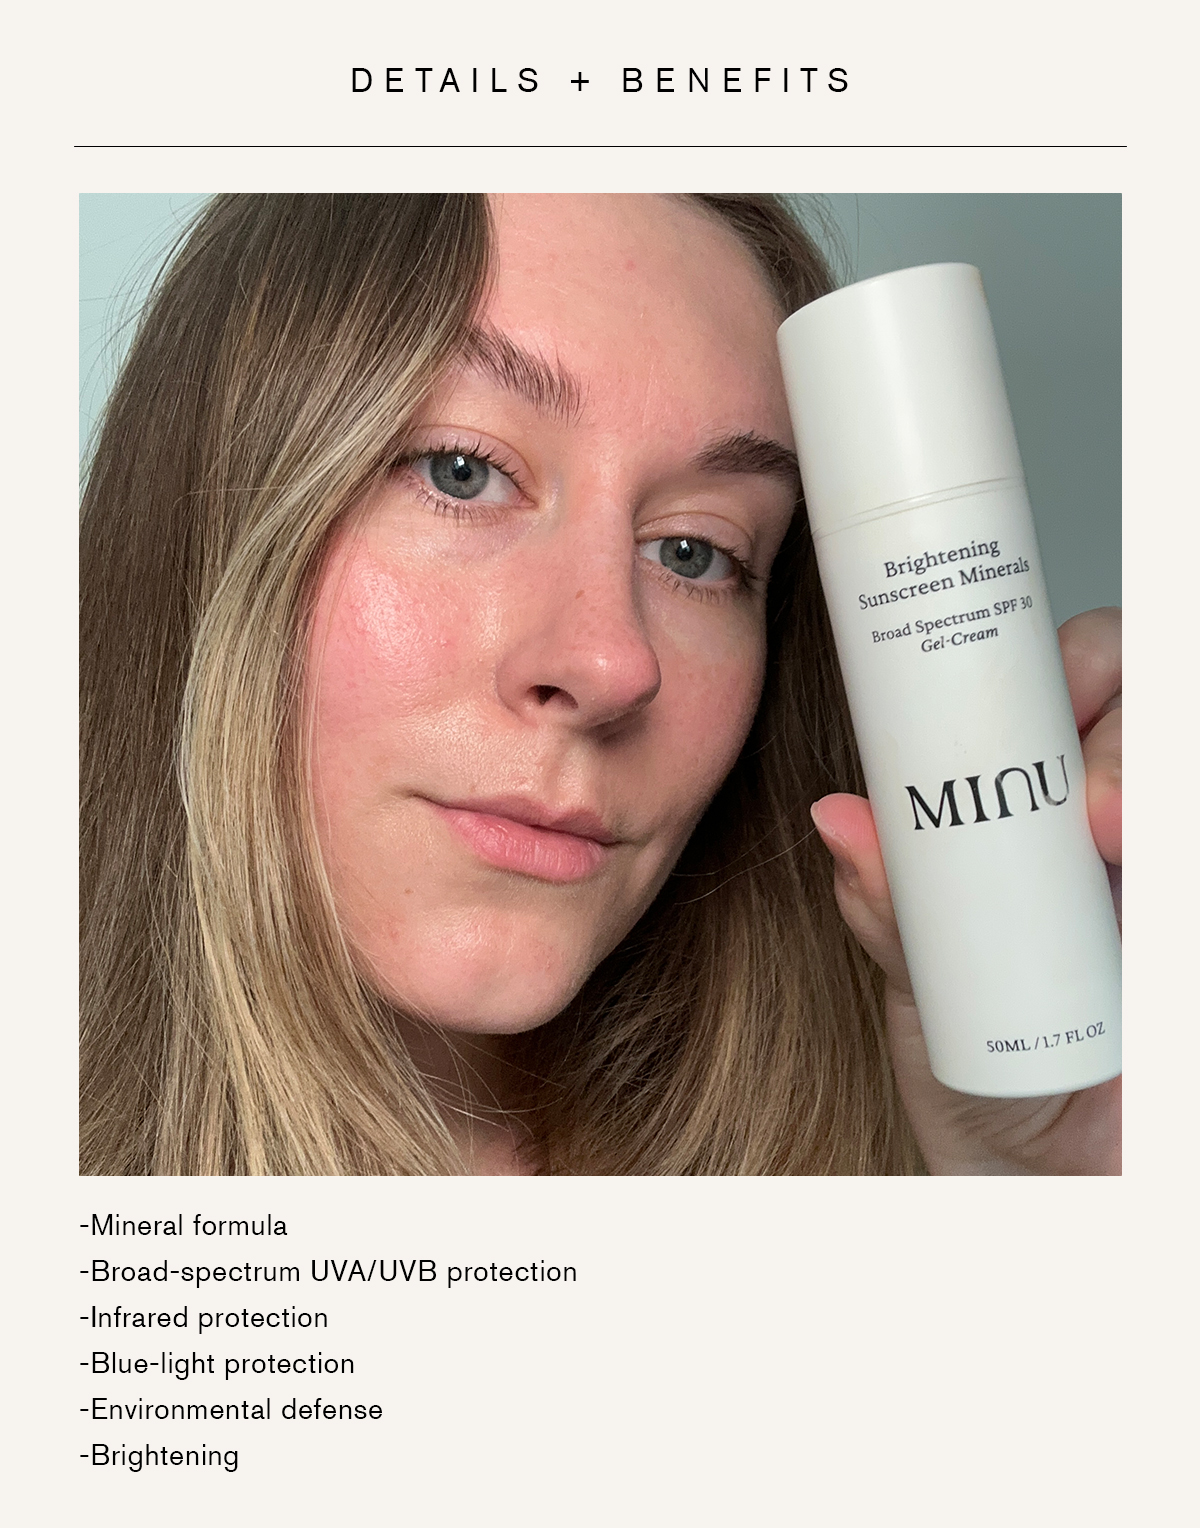 Kaitlyn McLintock holding a bottle of MINU sunscreen